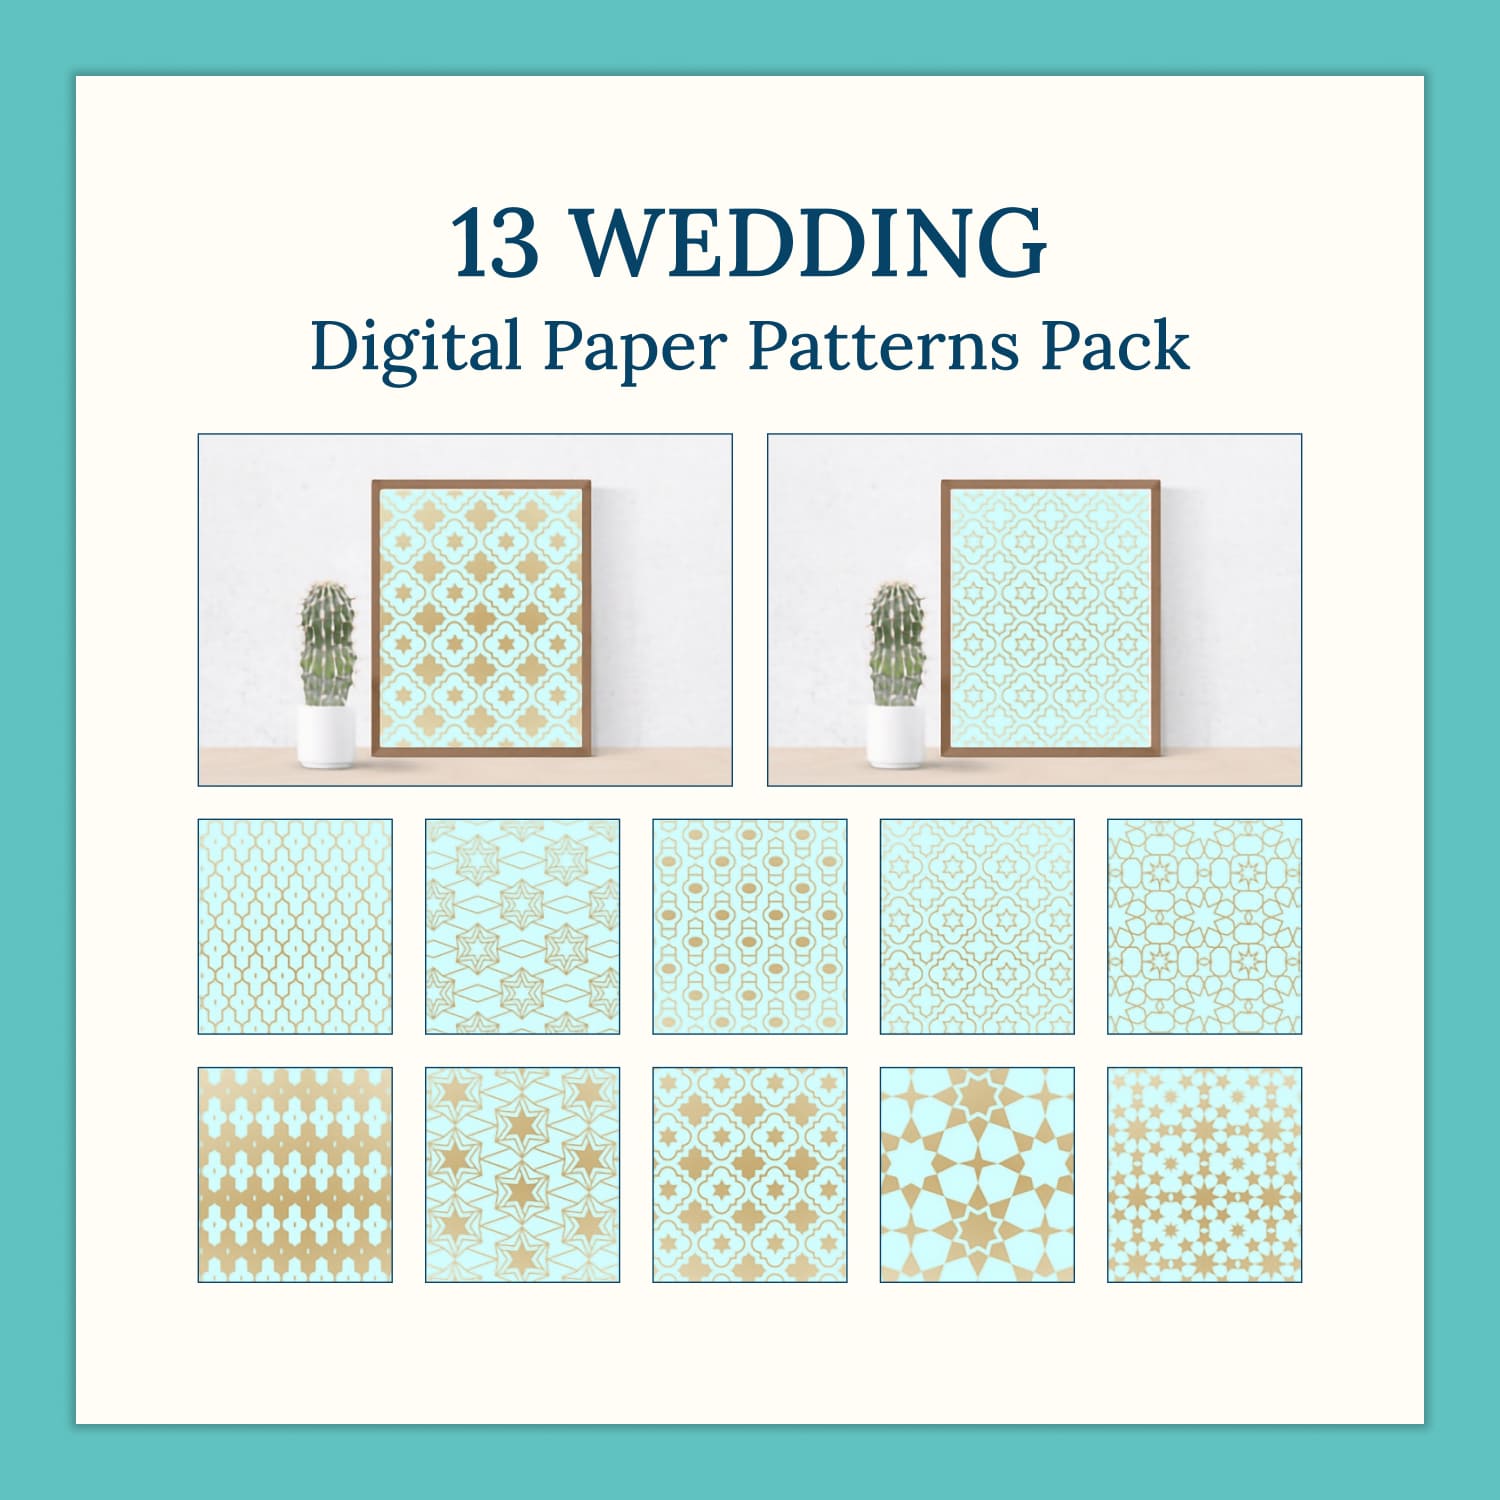 13 Wedding Digital Paper Patterns Pack.